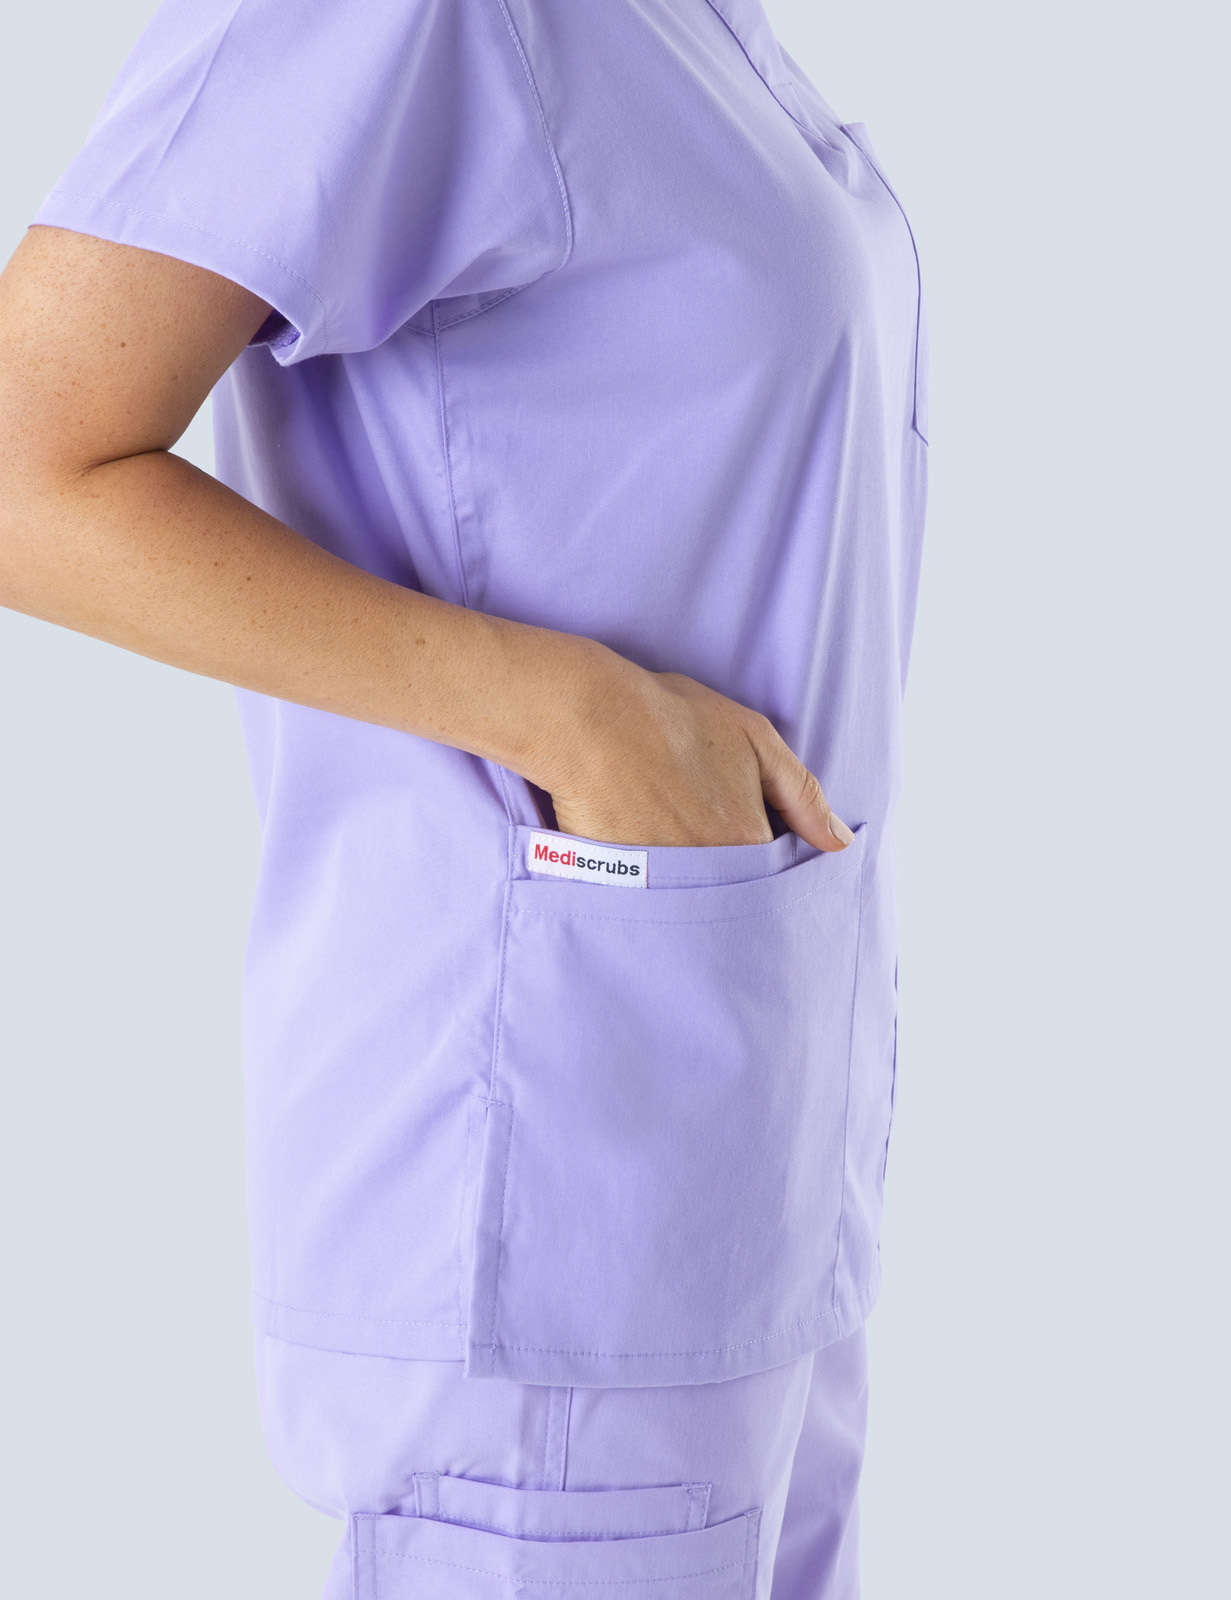 Queensland Children's Hospital Emergency Department Registrar Uniform Top Bundle  (4 Pocket Top in Lilac  incl Logos)